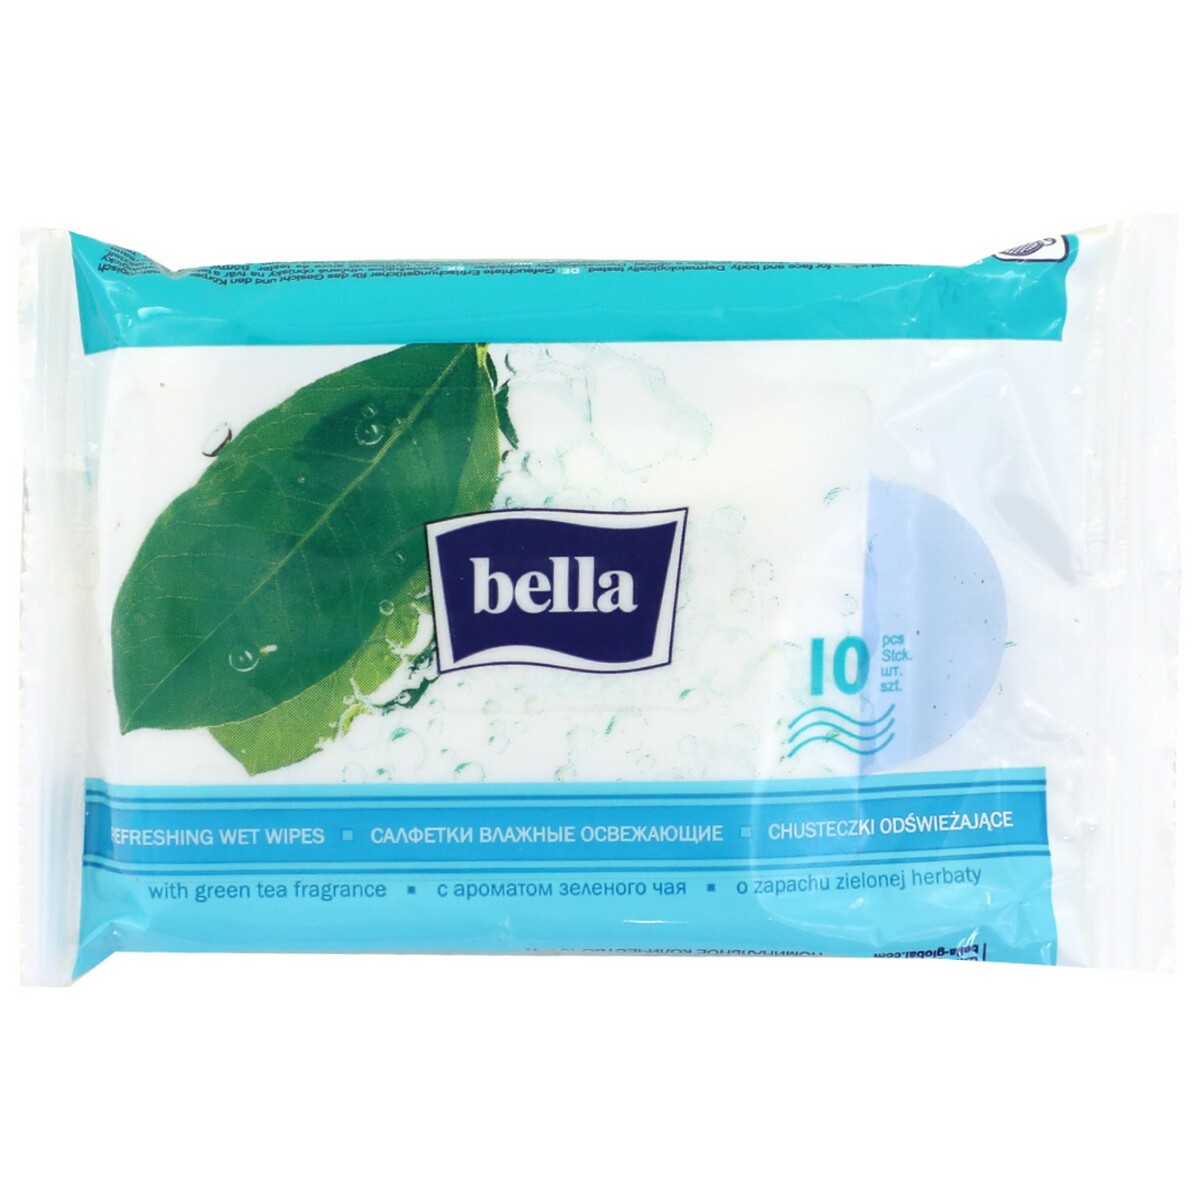 Bella Refreshing Wet Wipes 10's